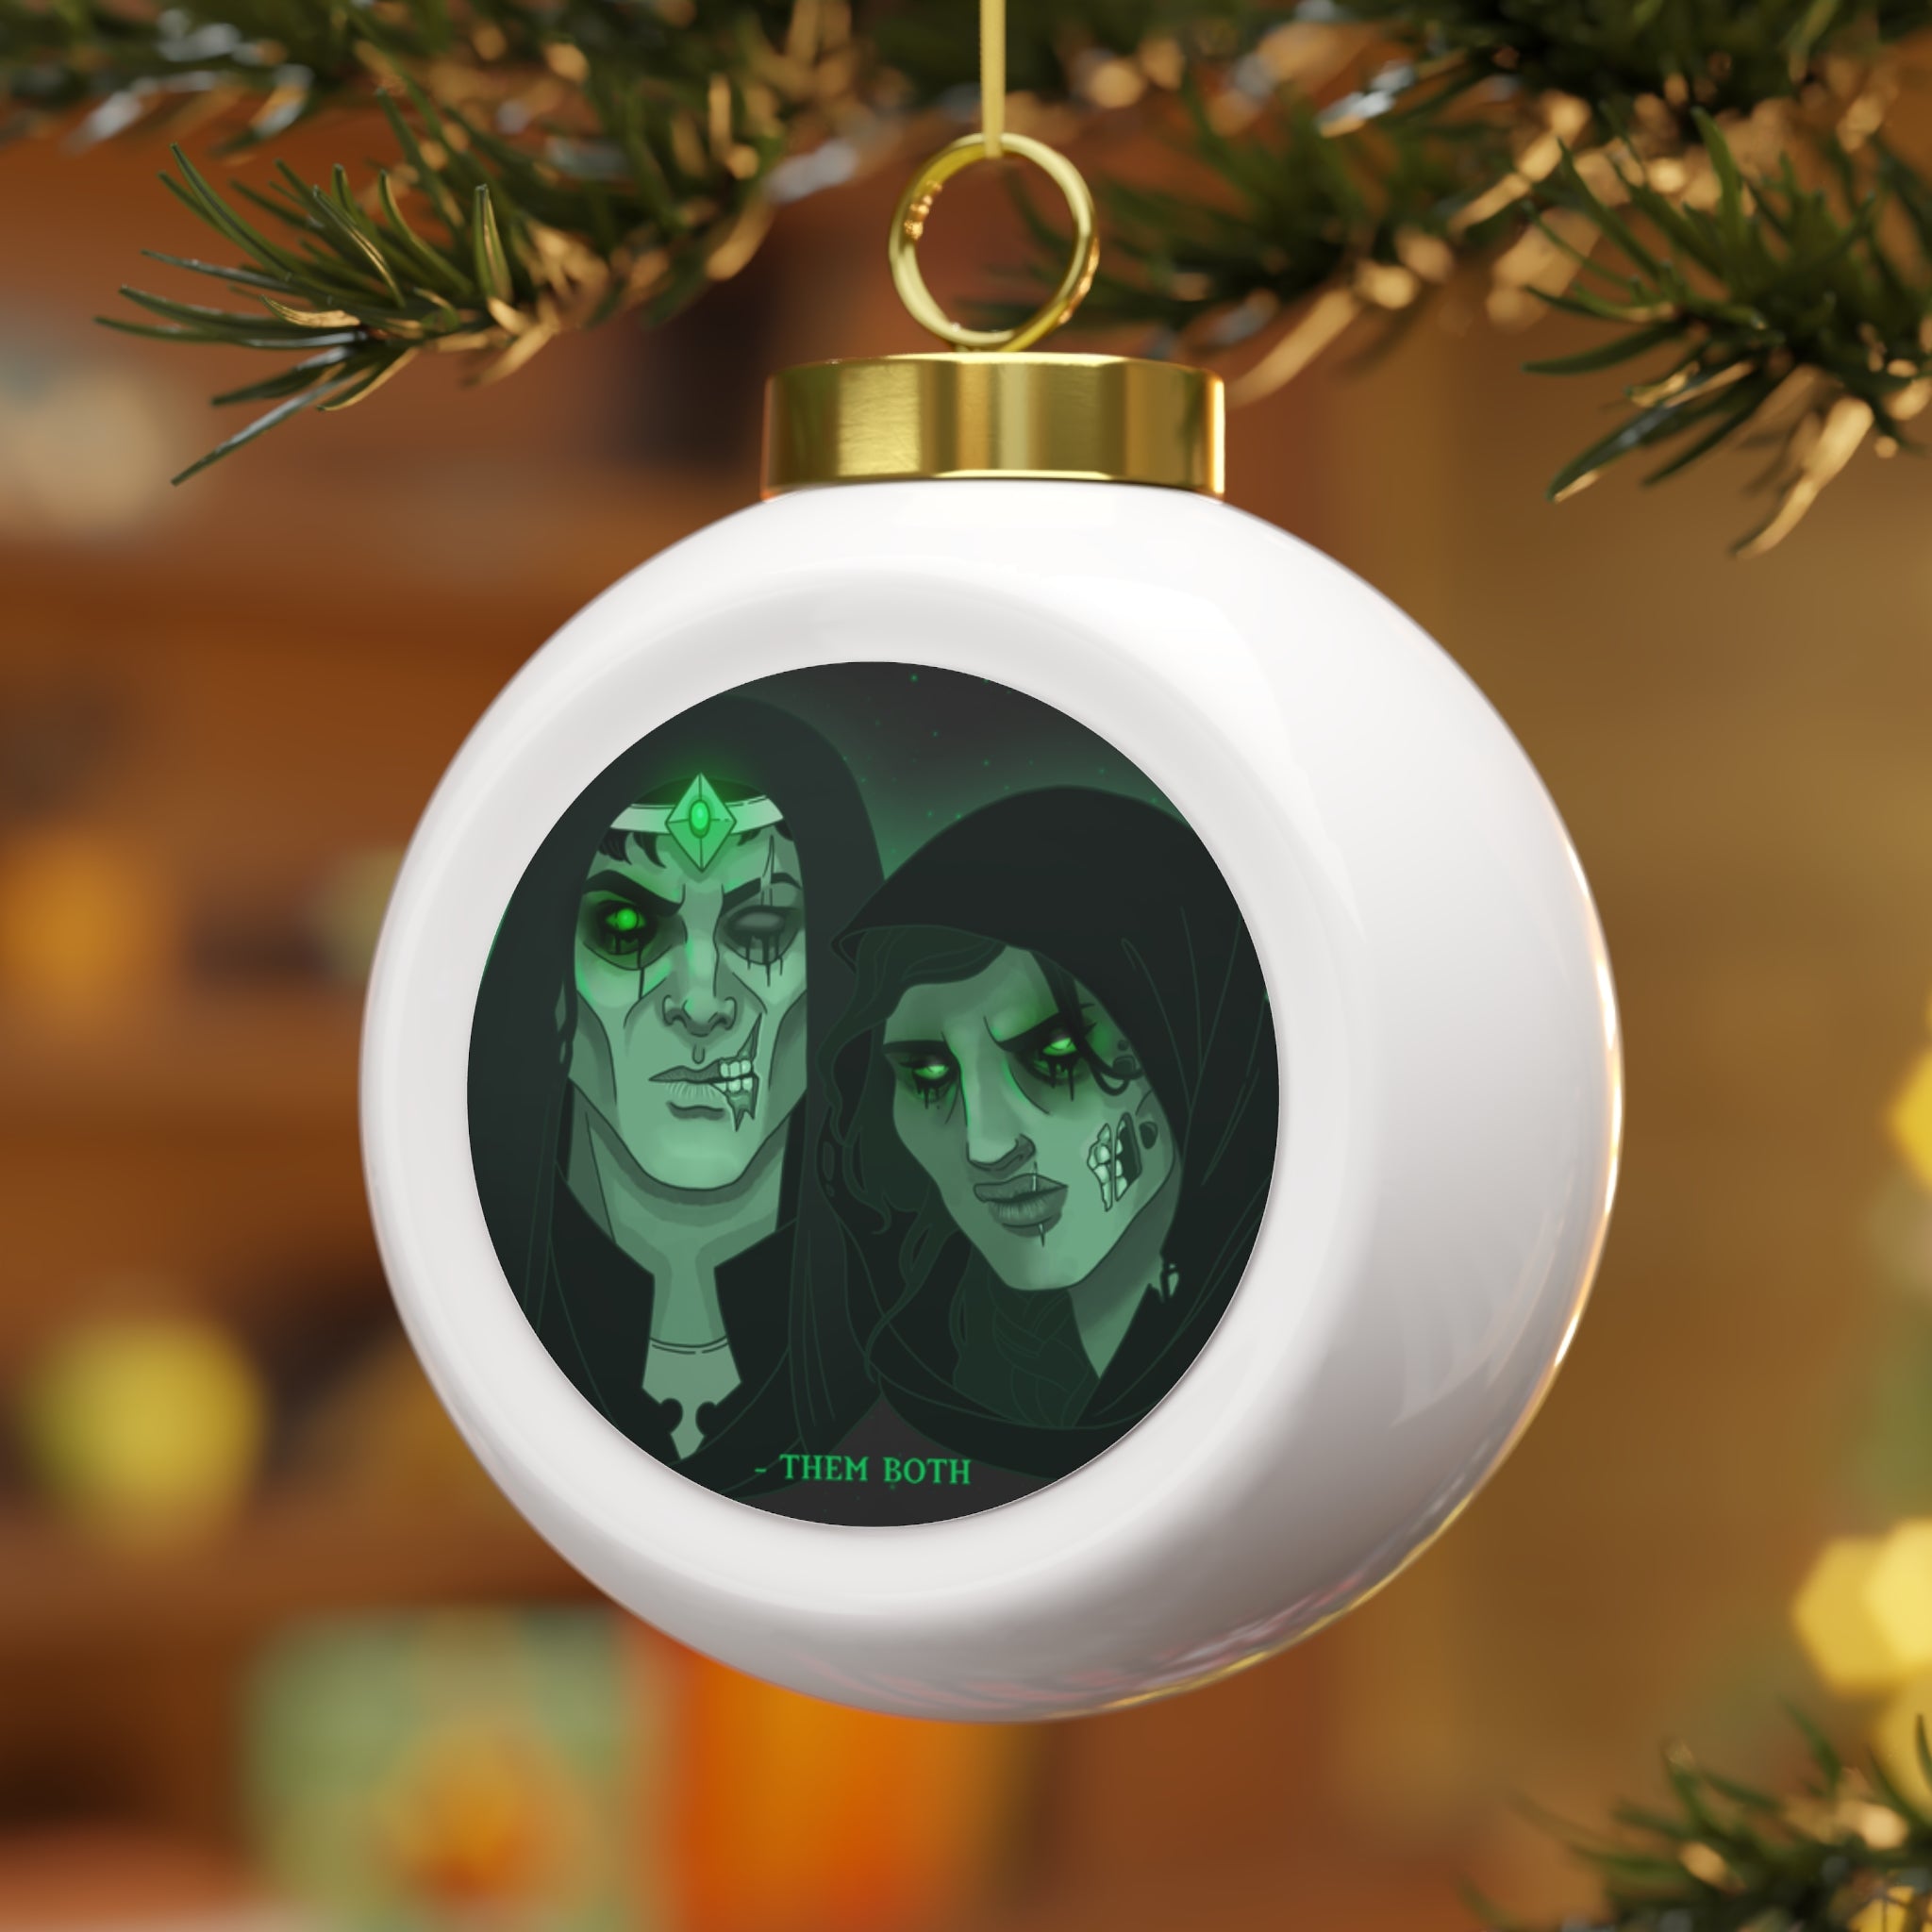 Them Both Christmas Ball Ornament